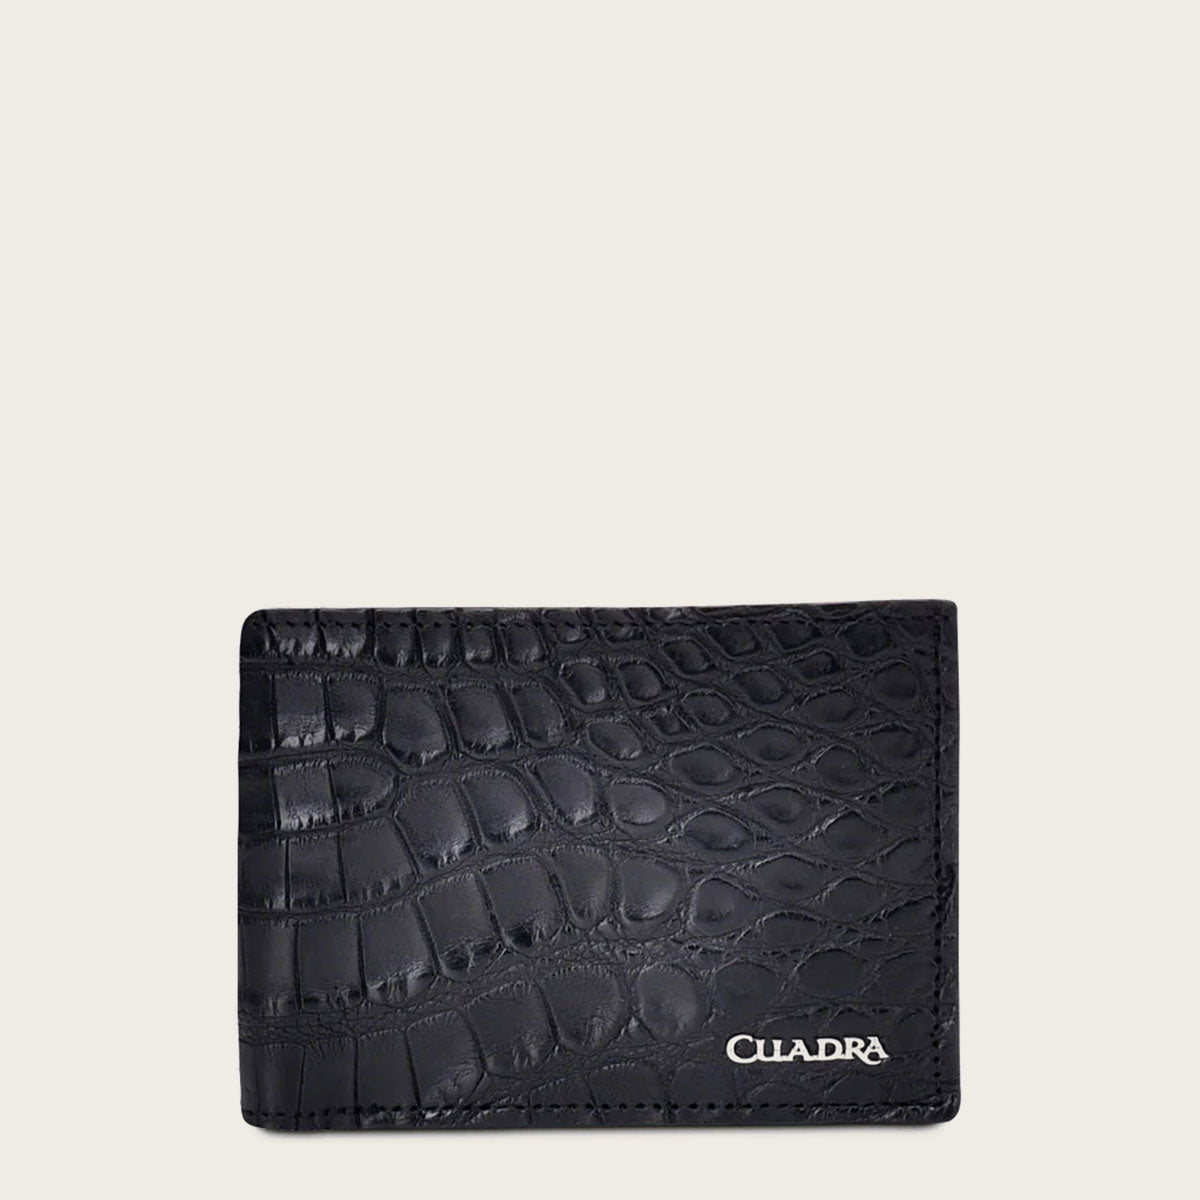 Bespoke Black Crocodile Leather Wallet, Bilfold, Card Holder